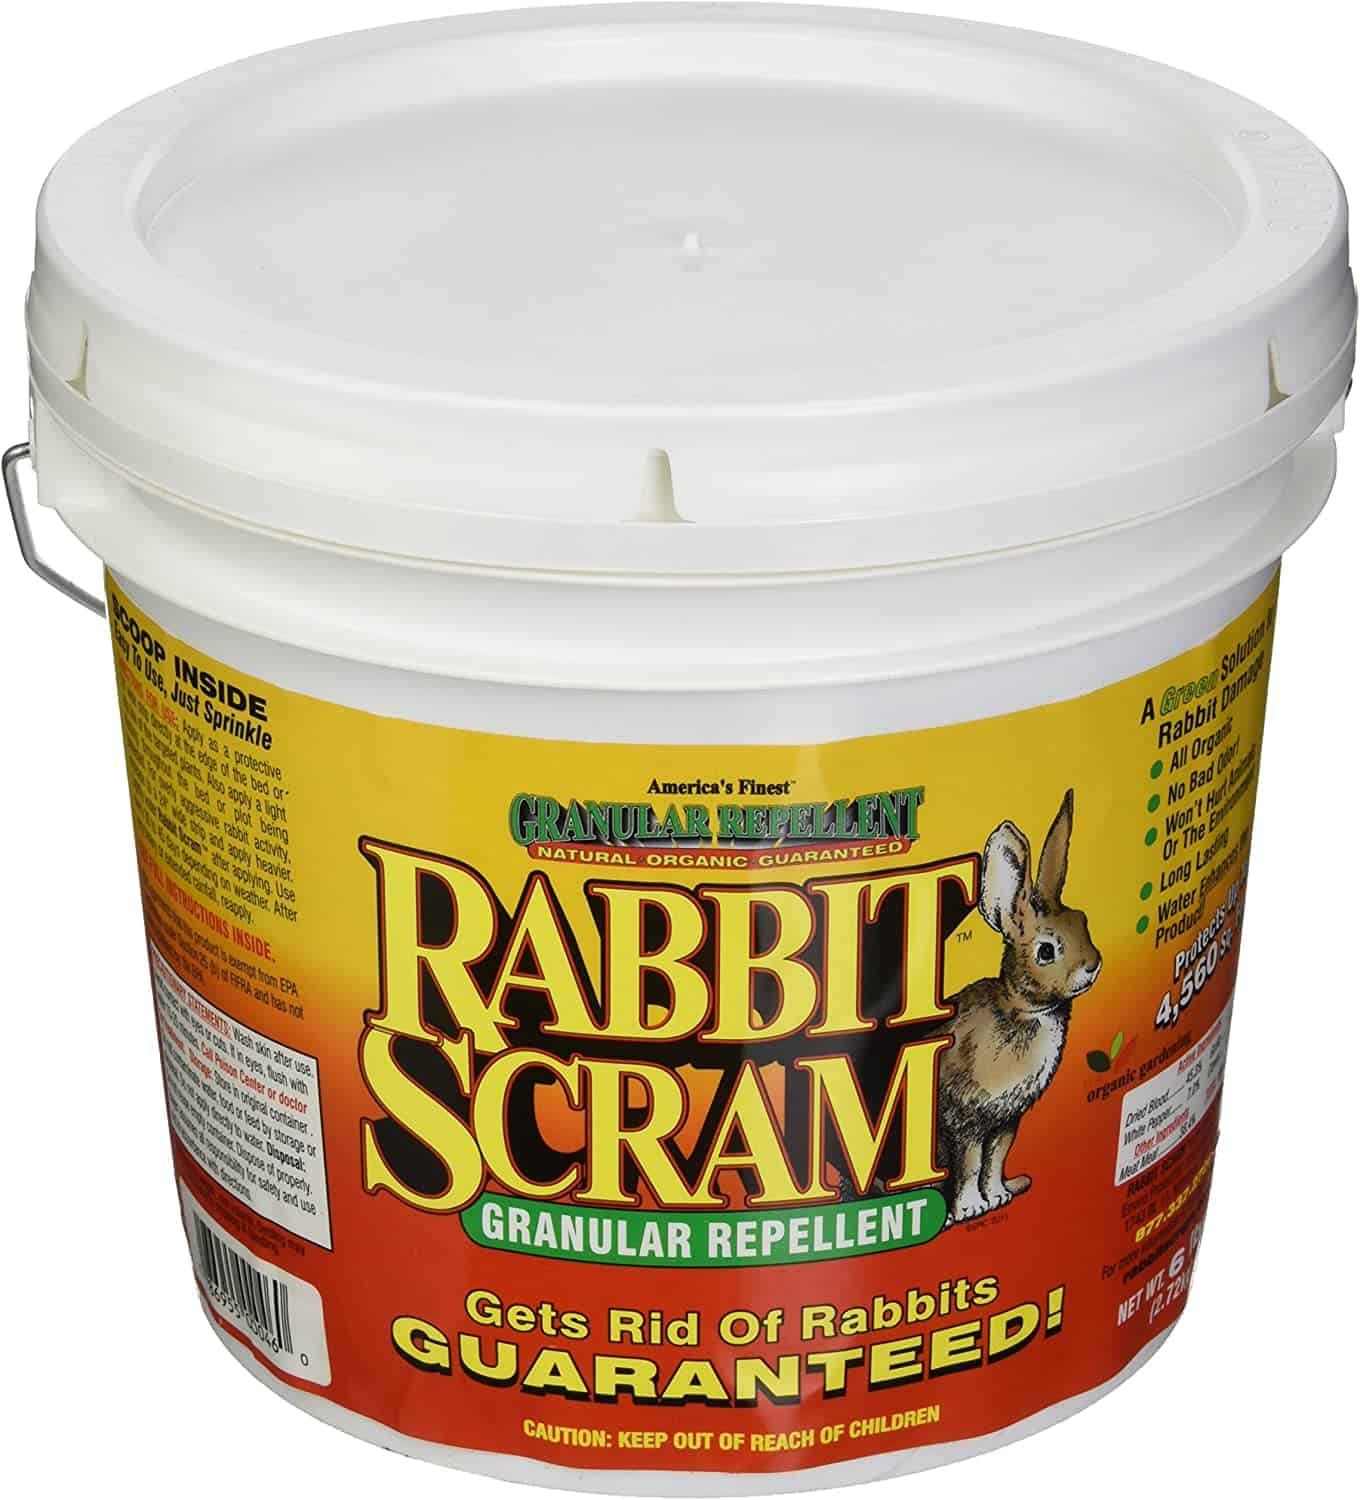 Rabbit Scram granular repellent